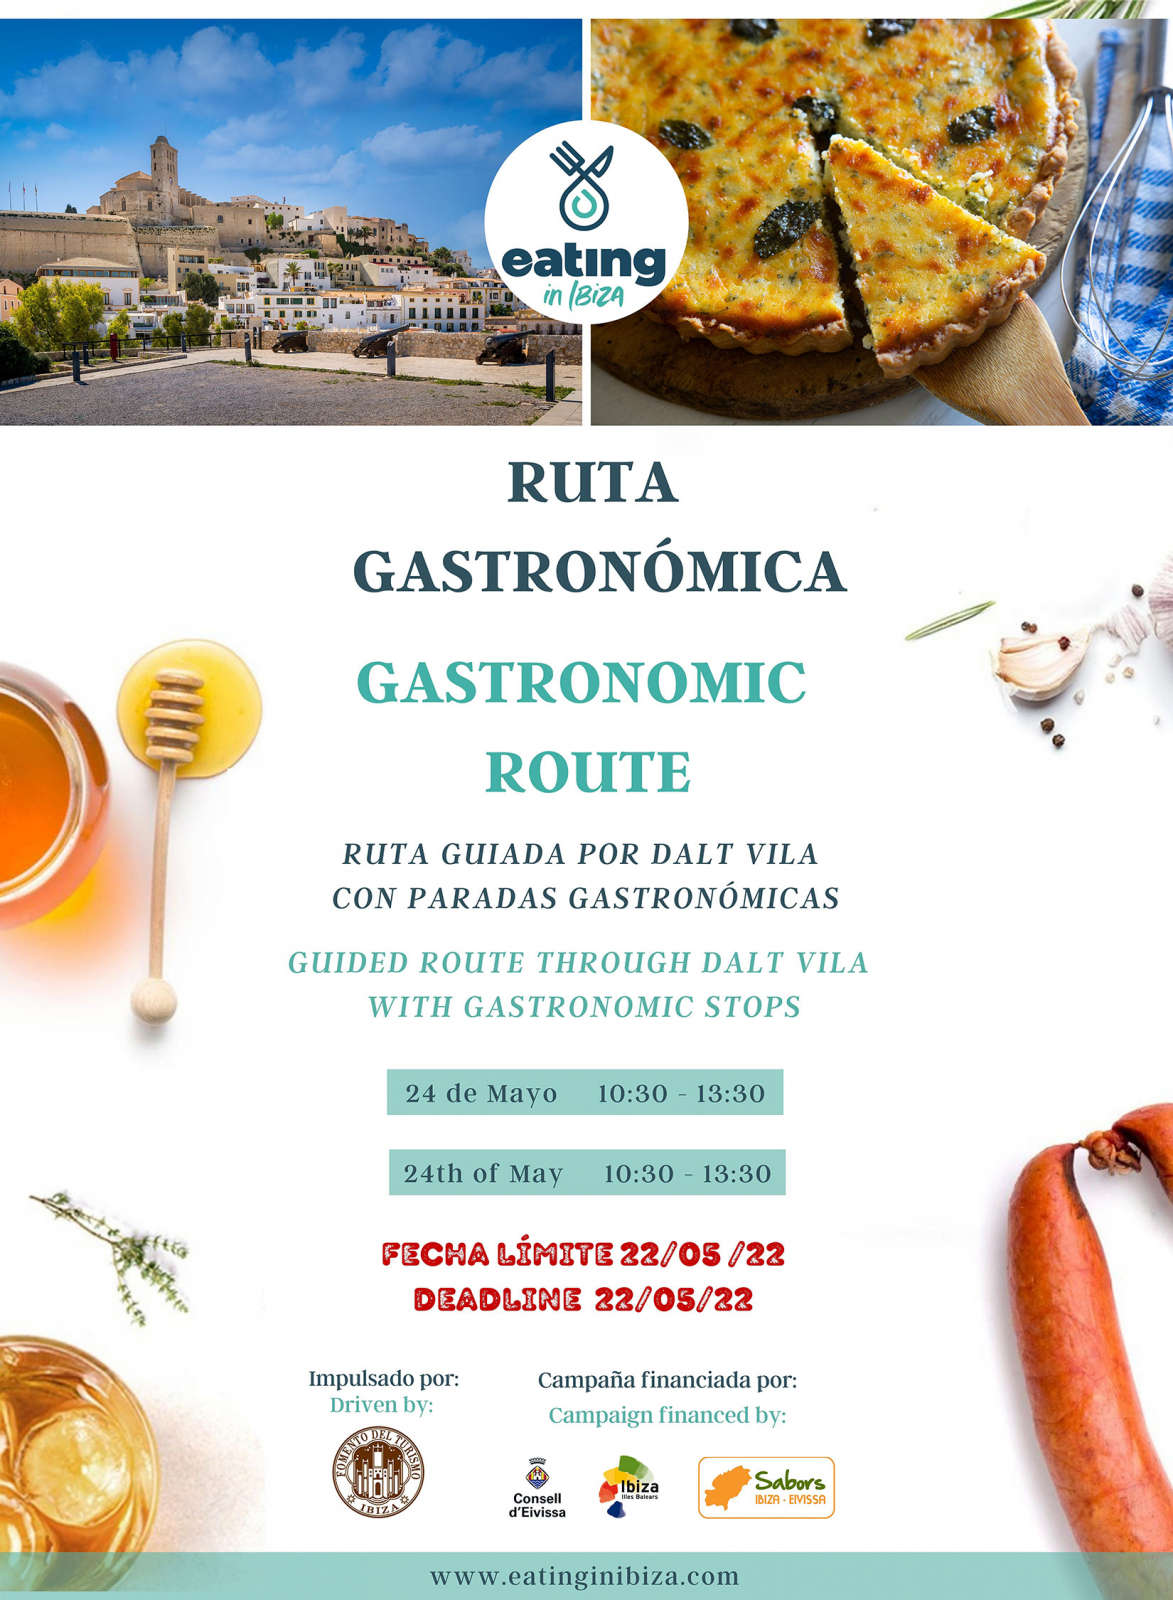 Gastronomic route